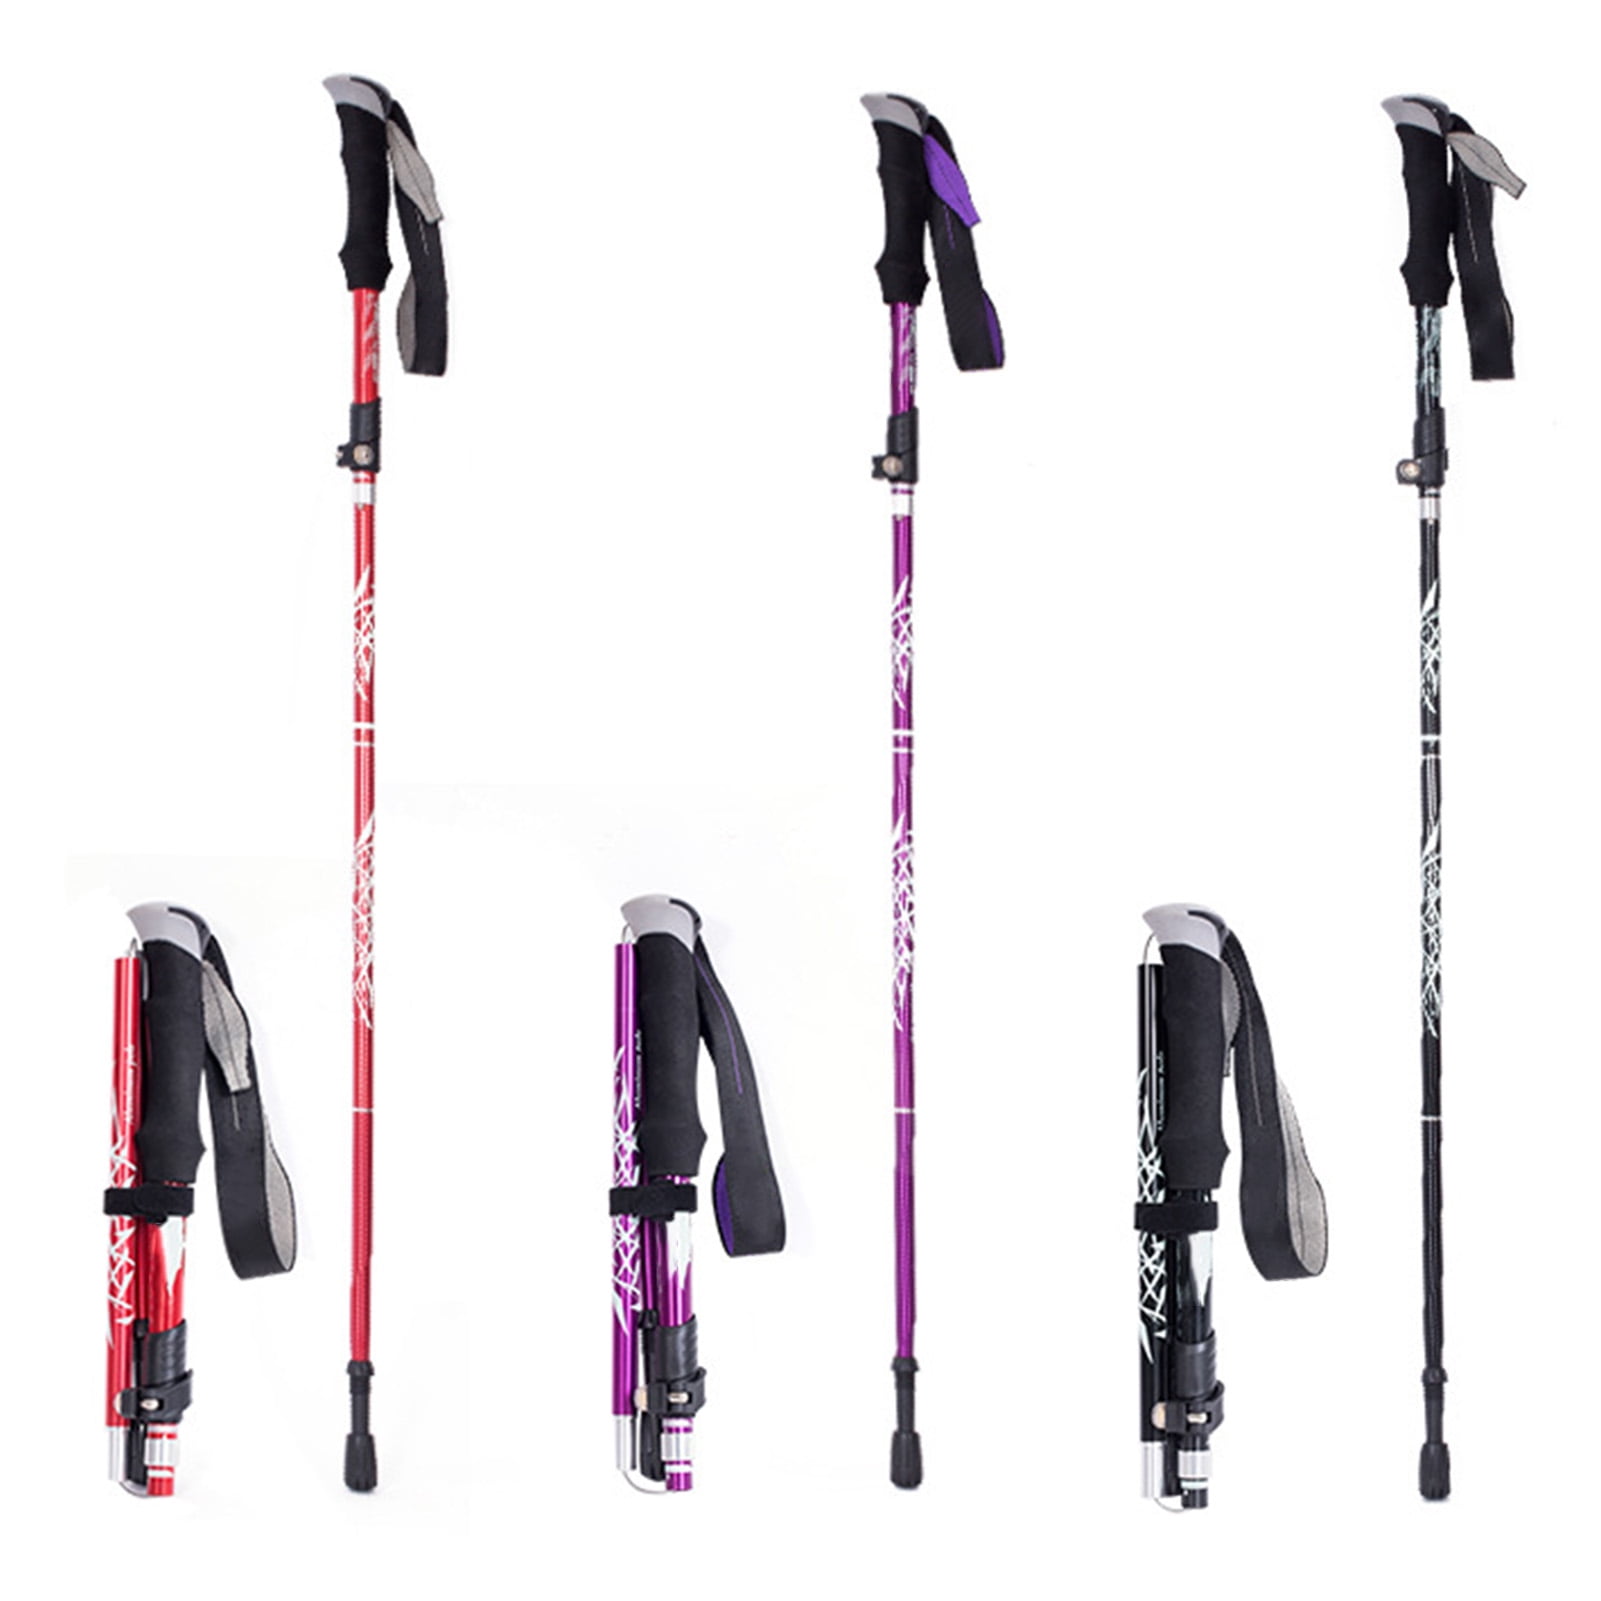 Walking Sticks Trekking Poles Hiking Sticks Ski touring poles Adjustable Foldable 